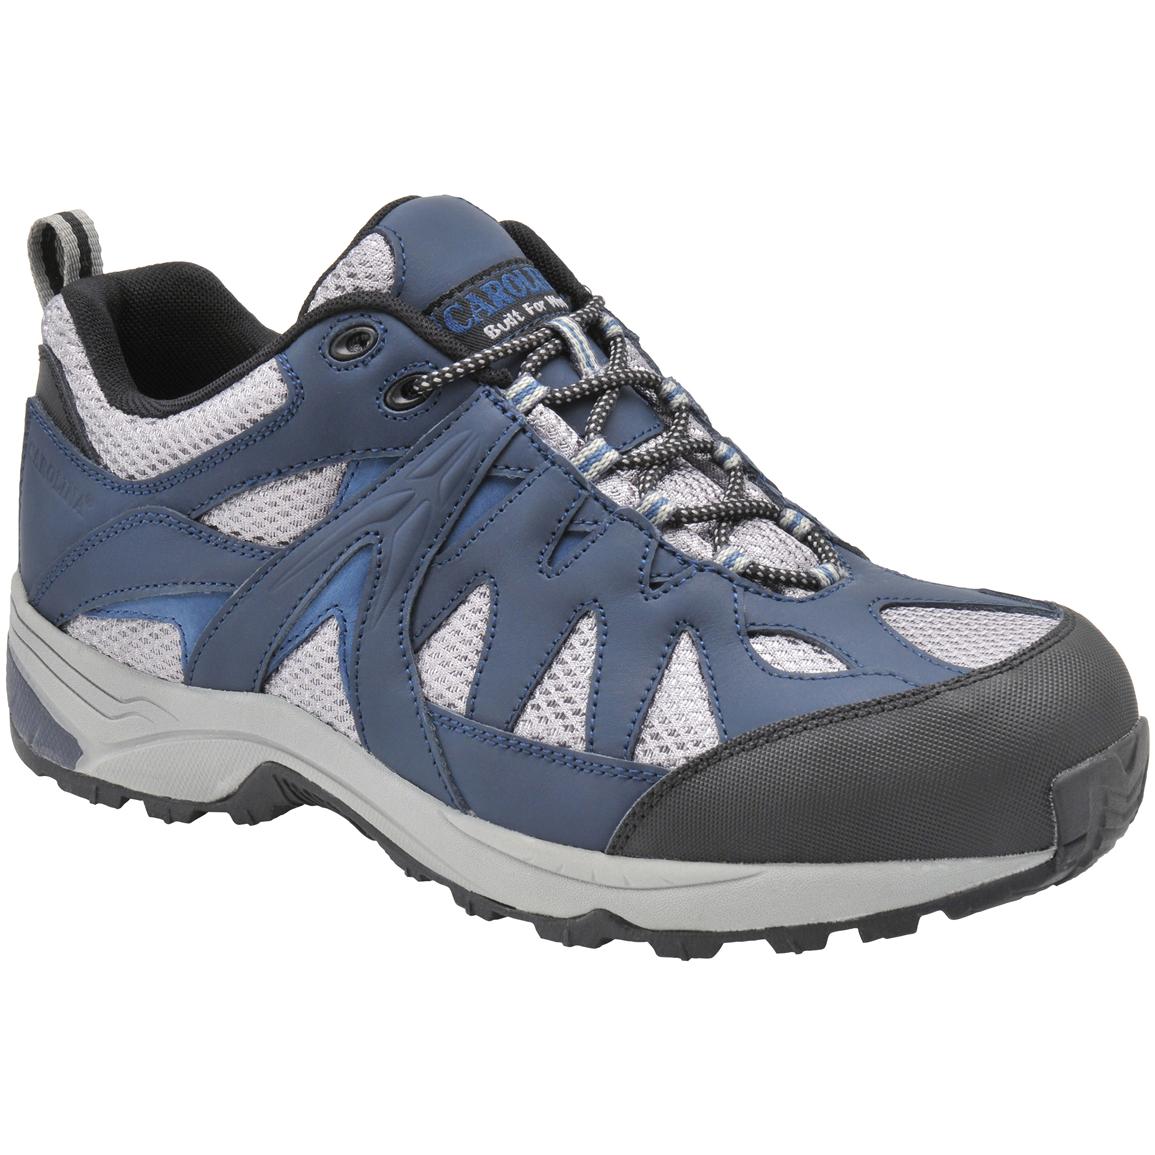 Men's Carolina Treadz Aluminum Toe Athletic Work Shoes - 427094 ...